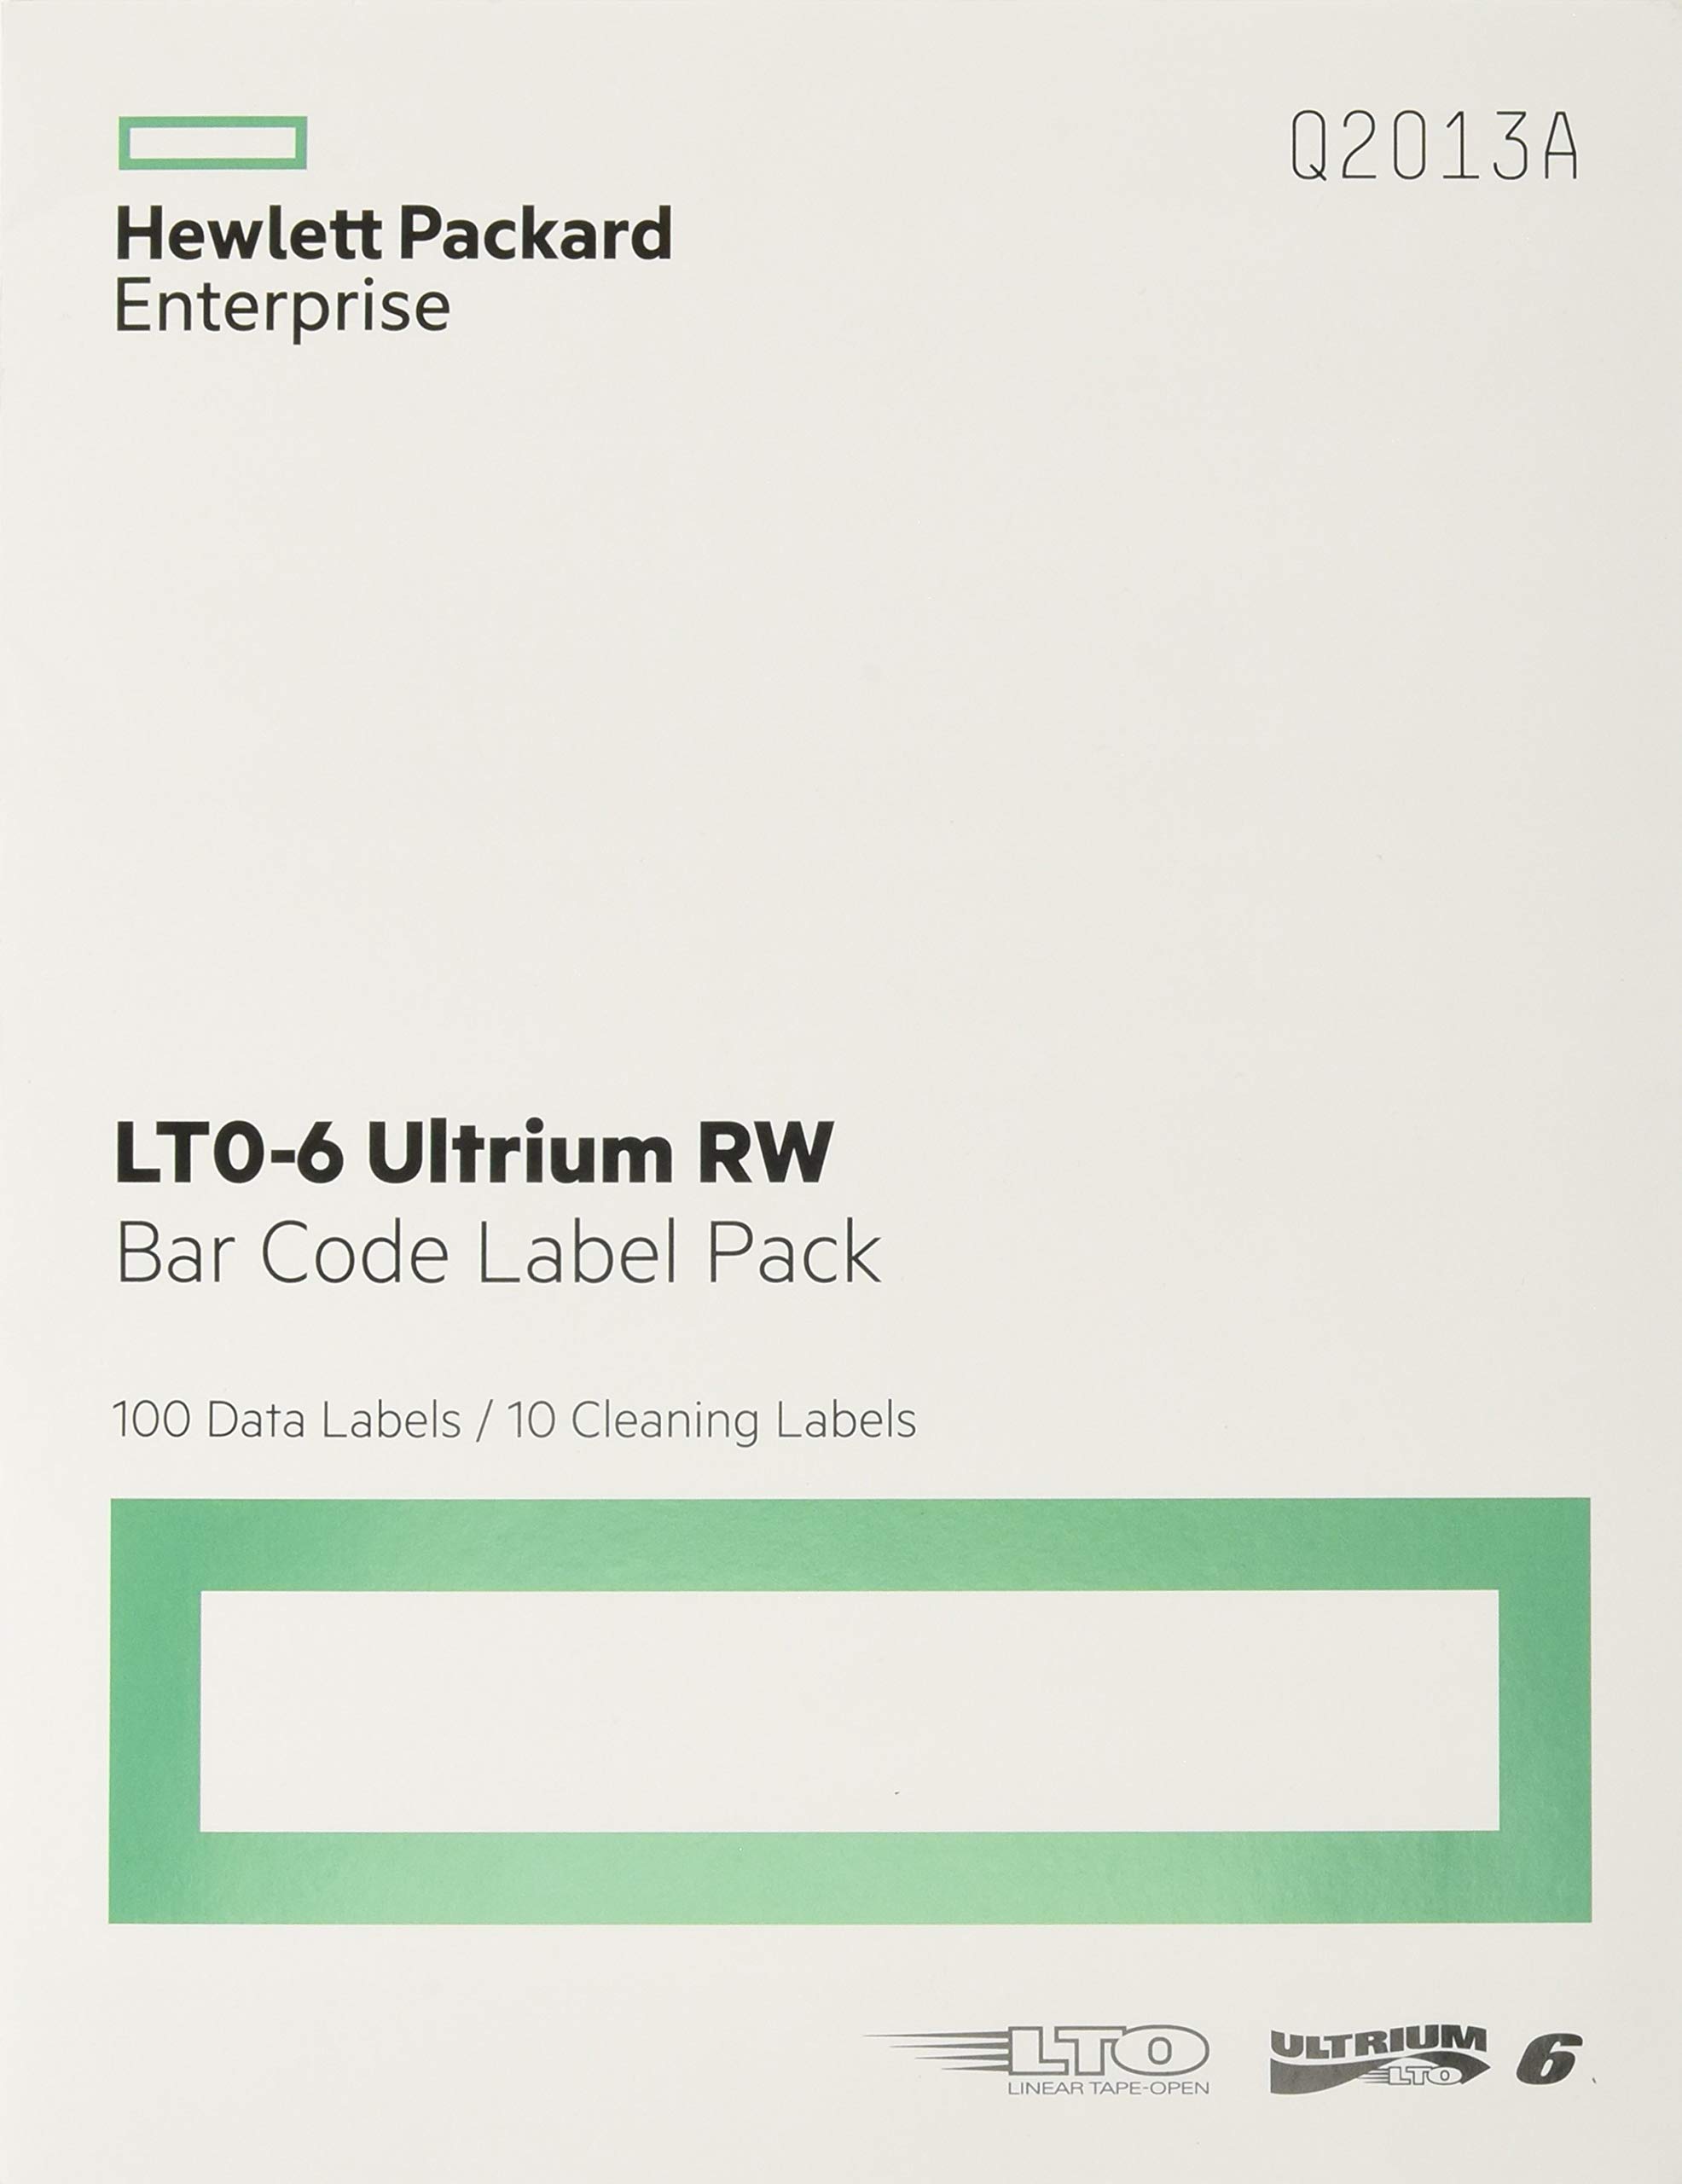 HP LTO-6 Ultrium RW Bar Code Label Pack